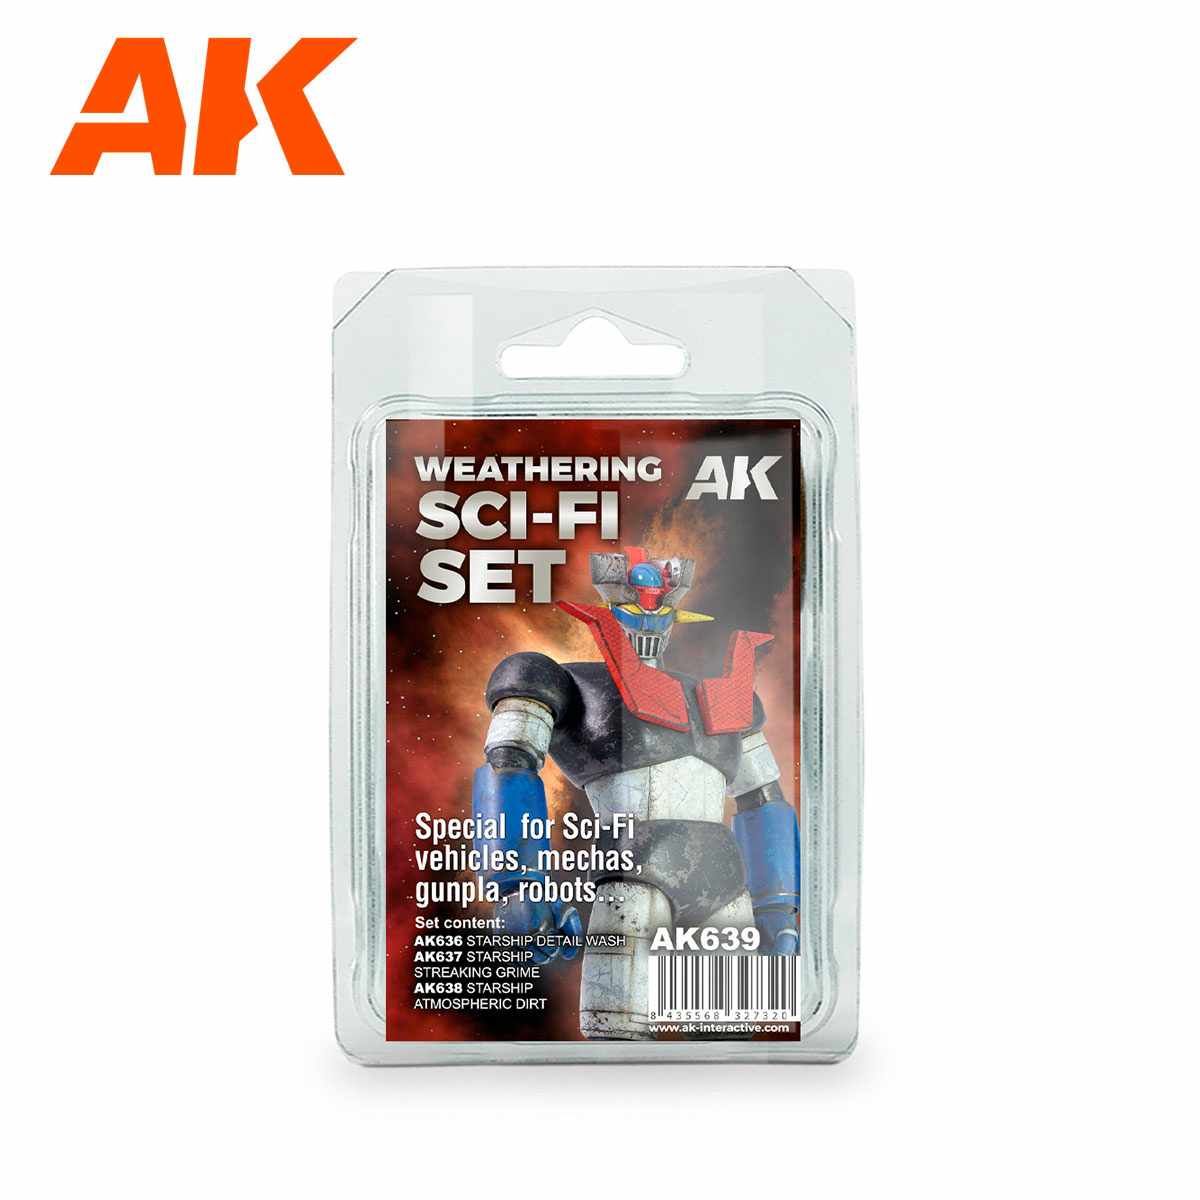 AK639 AK Interactive Научно-фантастический набор для везеринга / Weathering Sci Fi Set